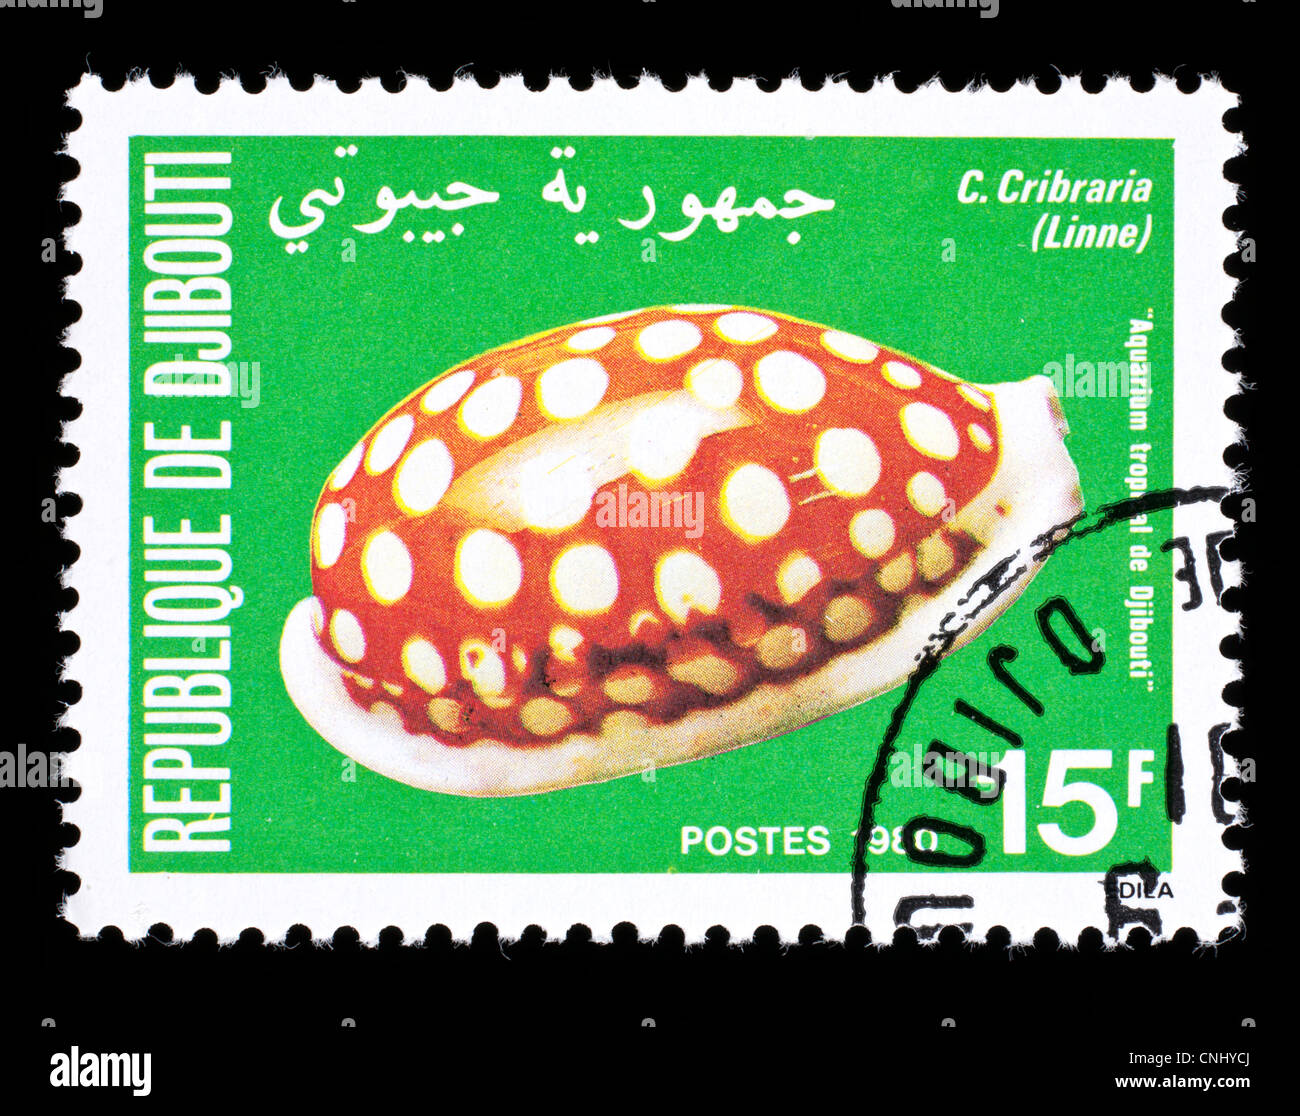 Postage stamp from Djibouti depicting a sea snail Cypraea cribraria. Stock Photo